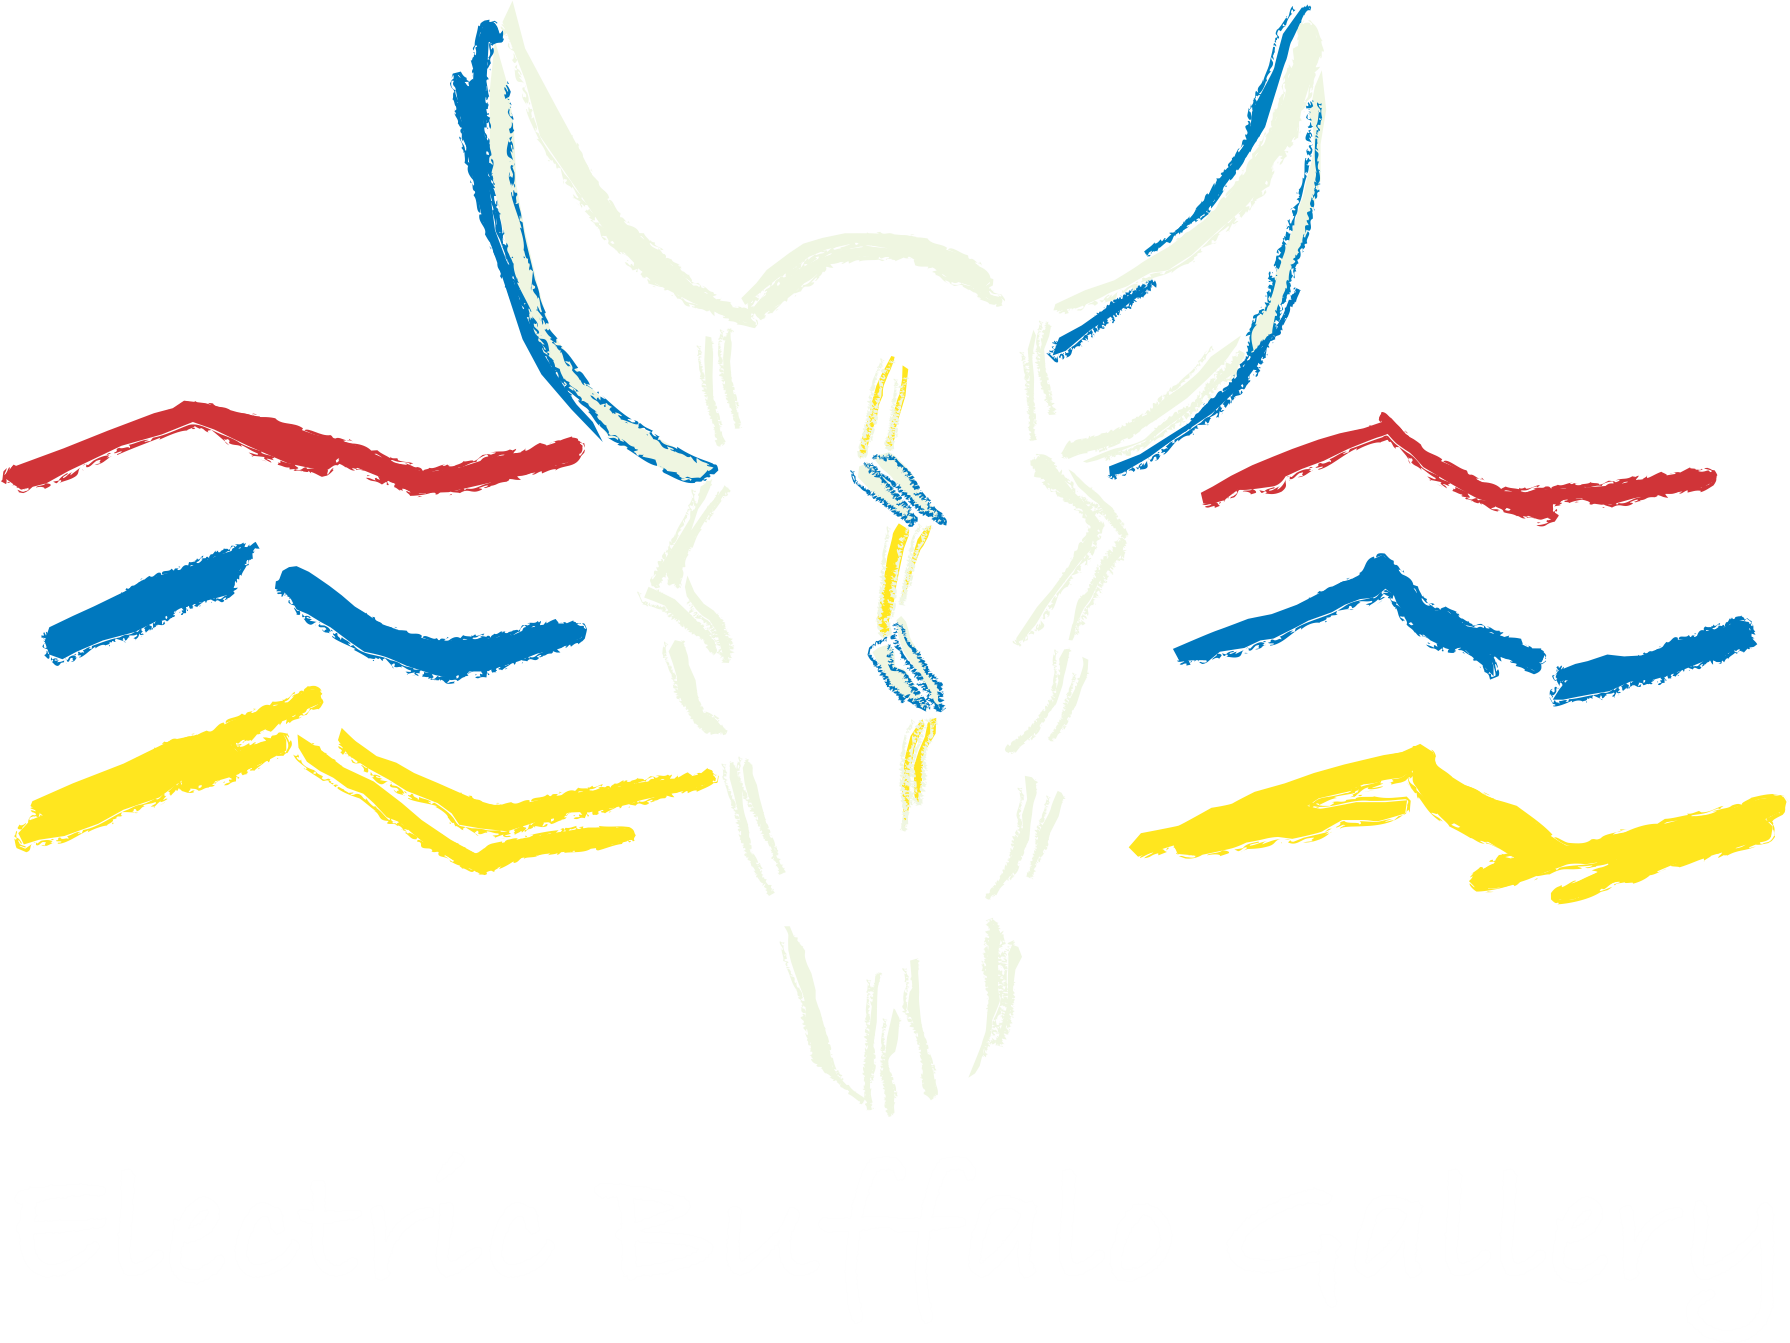 Electric Buffalo Gallery